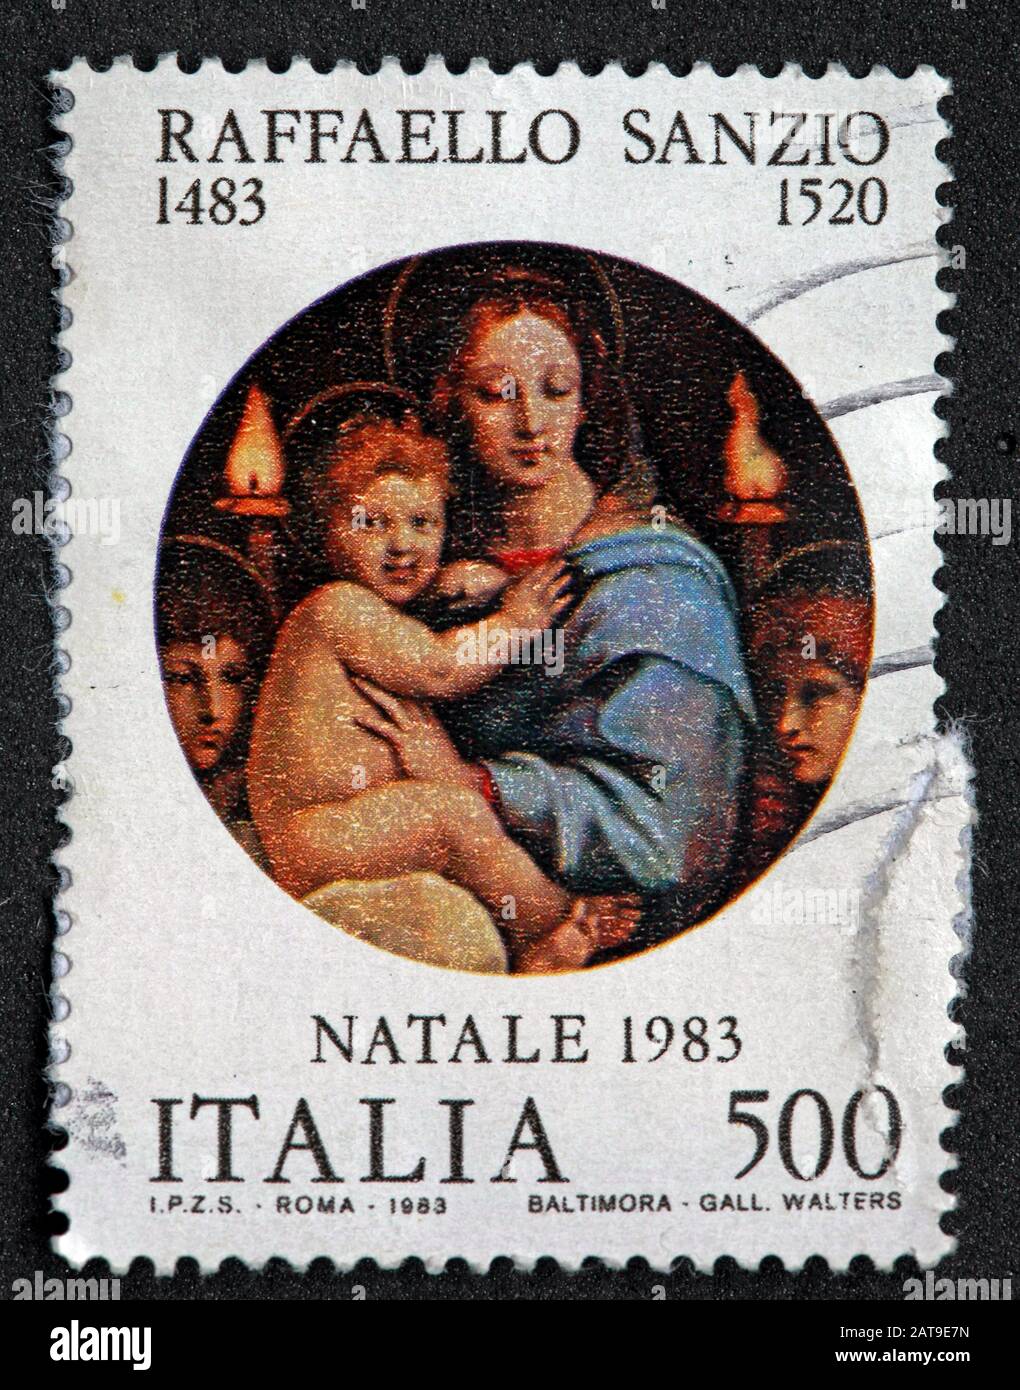 Timbre italien, poste Italia utilisé et franked Stamp, Italia 500 lire Raffaello Sanzio 1483-1520 Natale 1983- Roma - Baltimora Banque D'Images